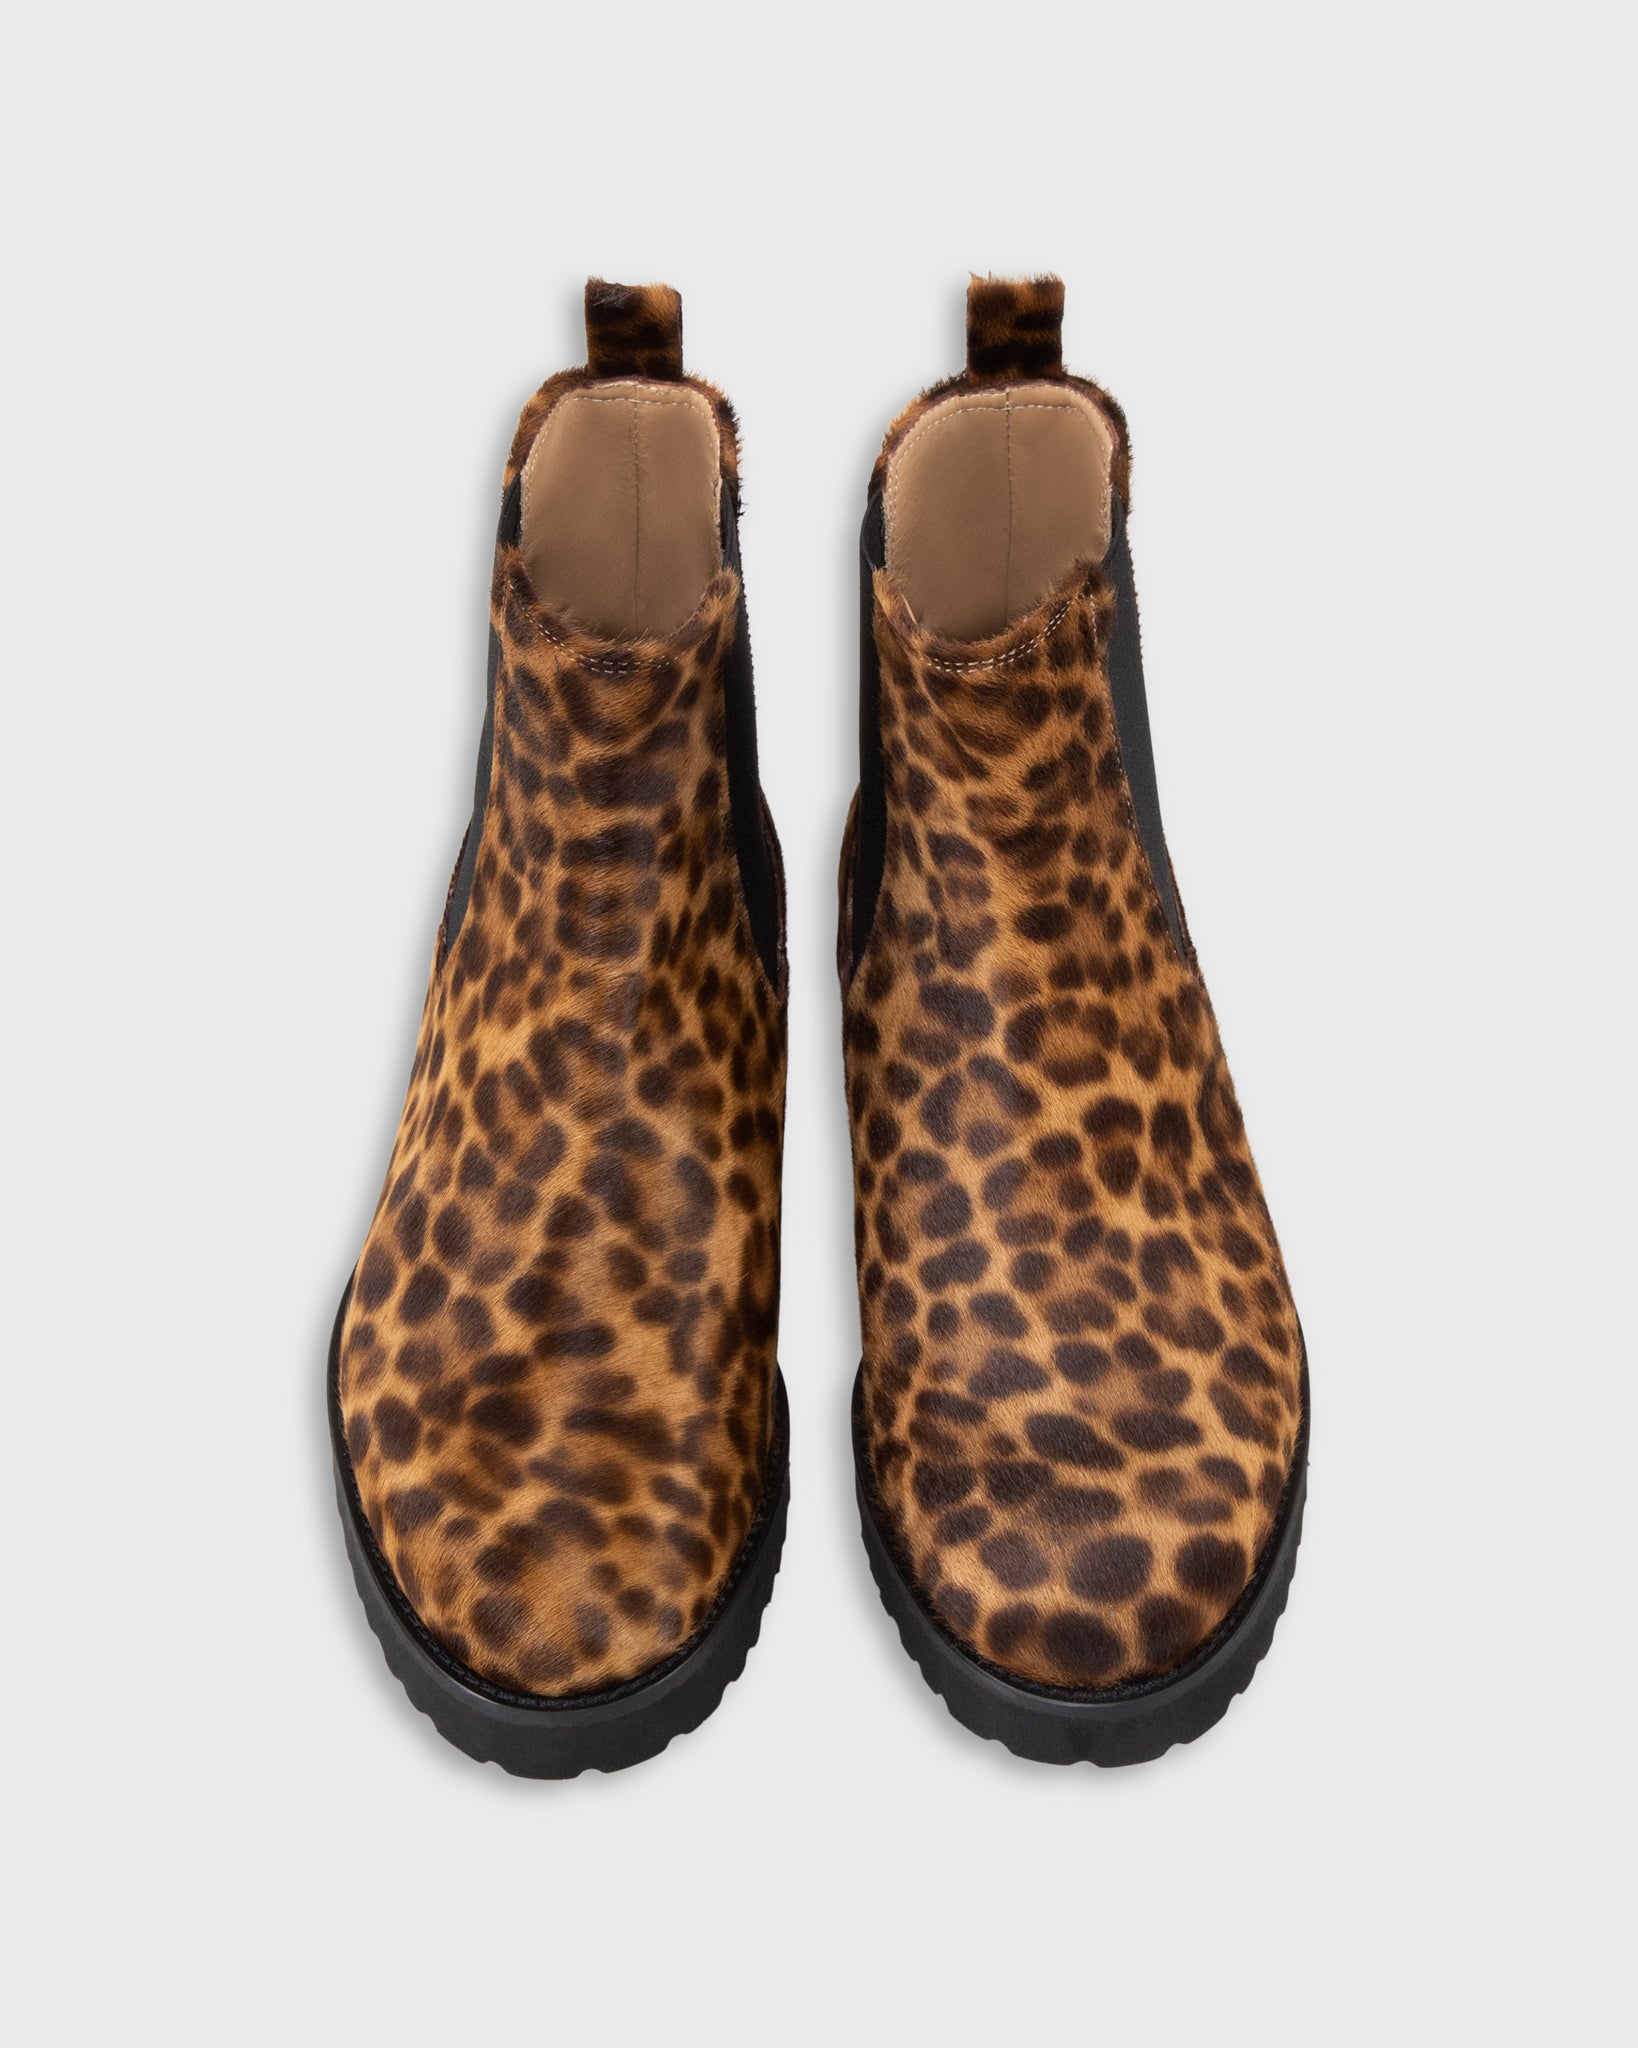 Lug Sole Chelsea Boot in Brown/Cognac Savana Leopard Pony